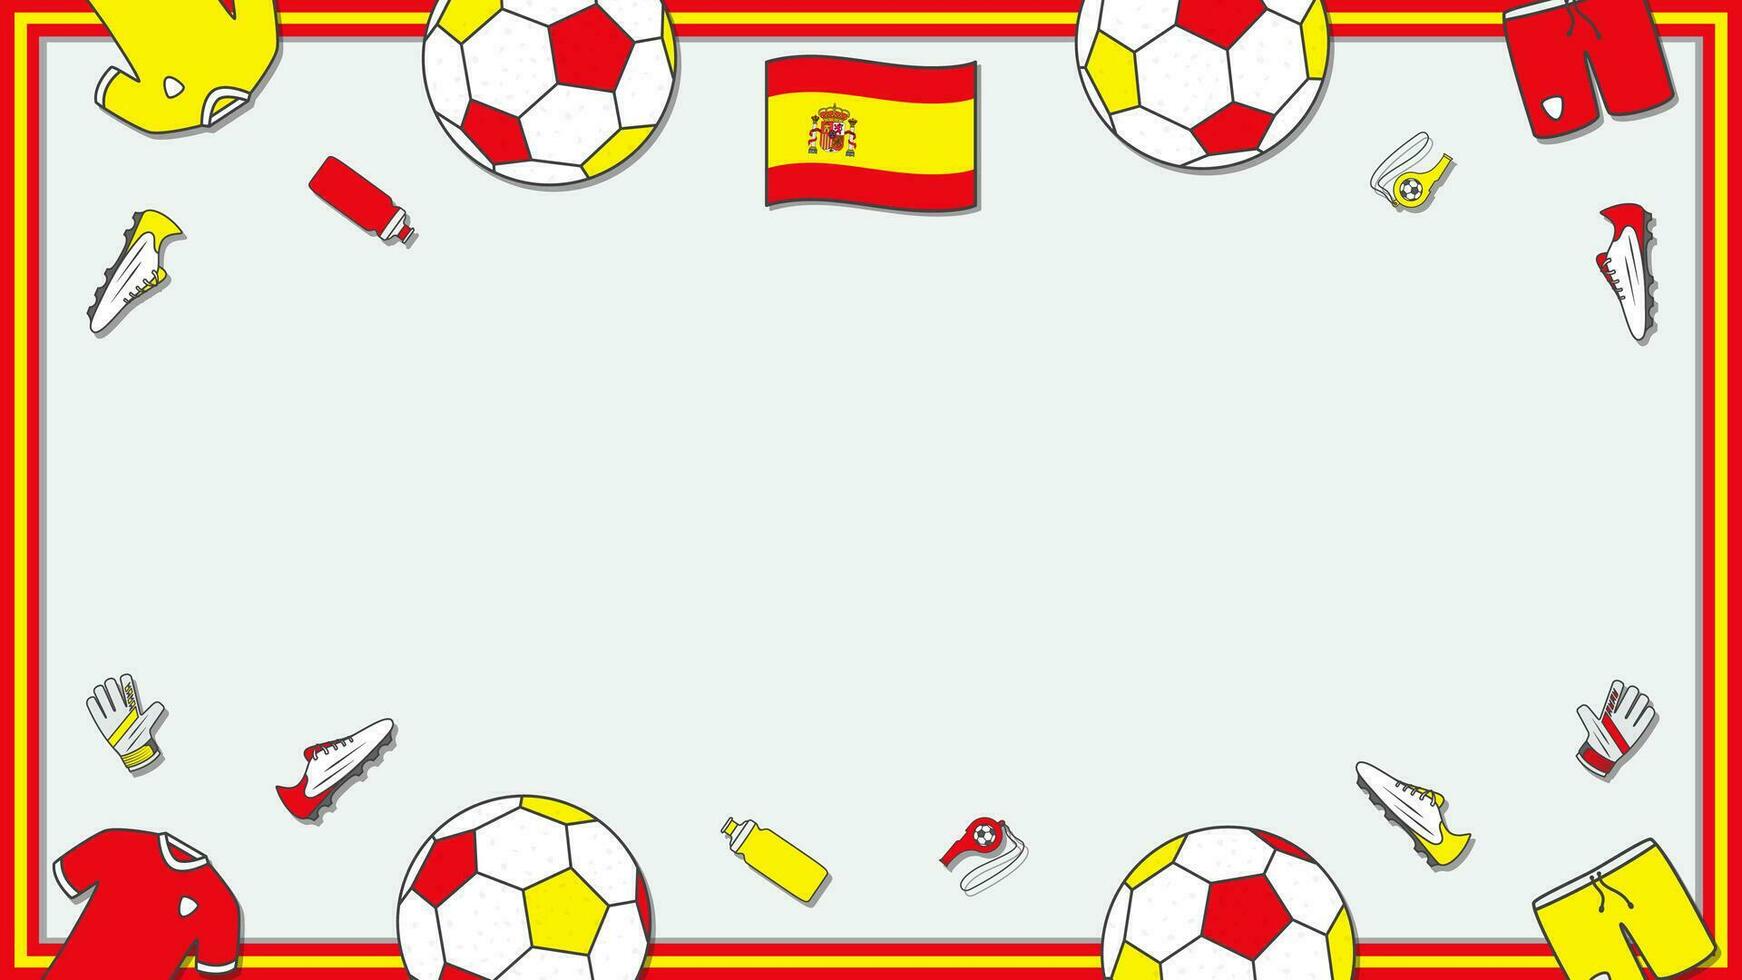 Football Background Design Template. Football Cartoon Vector Illustration. Championship In Spain